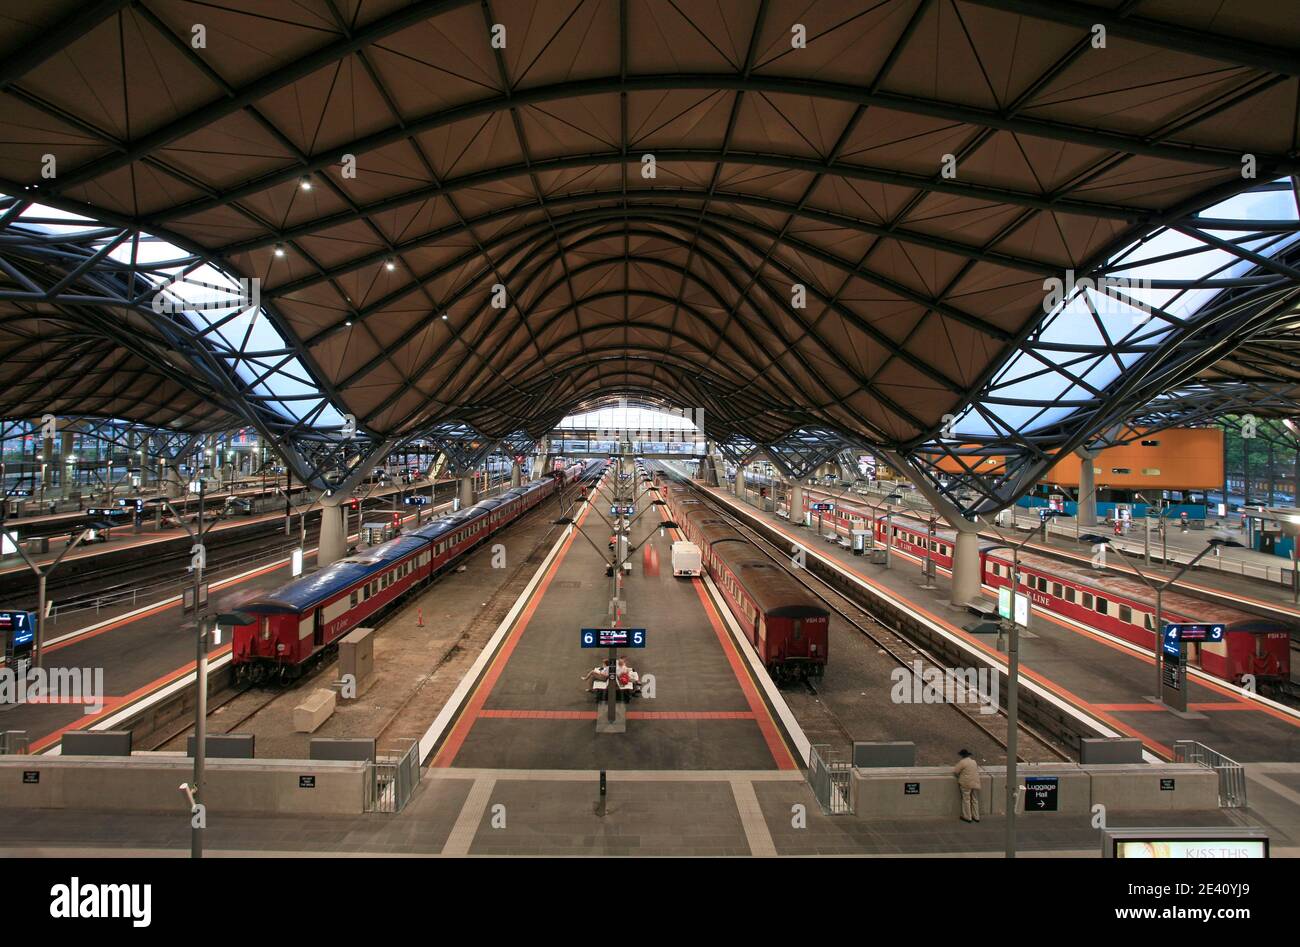 Southern Cross Station Melbourne, bahnhof, railroad station, railway station, stazione, estaci—n ferroviaria, australien, australia, architect Nichola Stock Photo